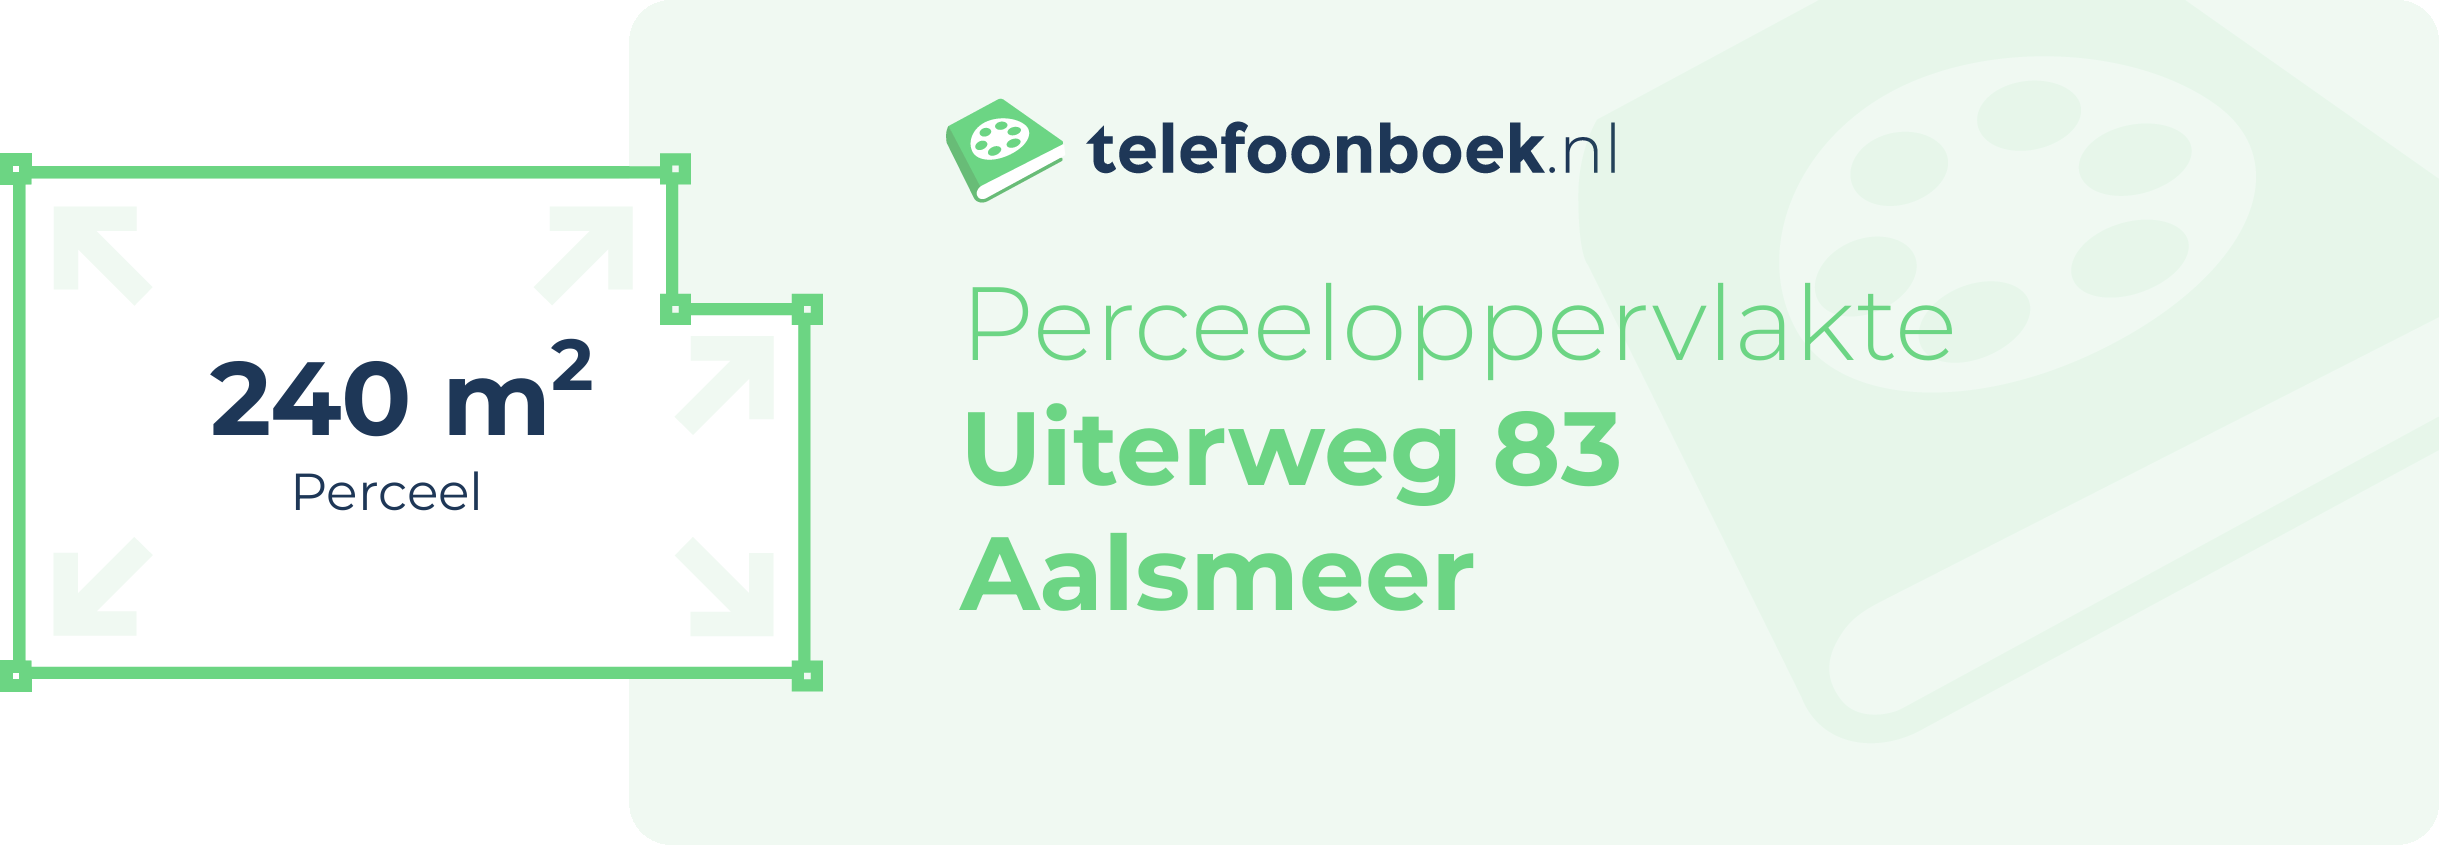 Perceeloppervlakte Uiterweg 83 Aalsmeer